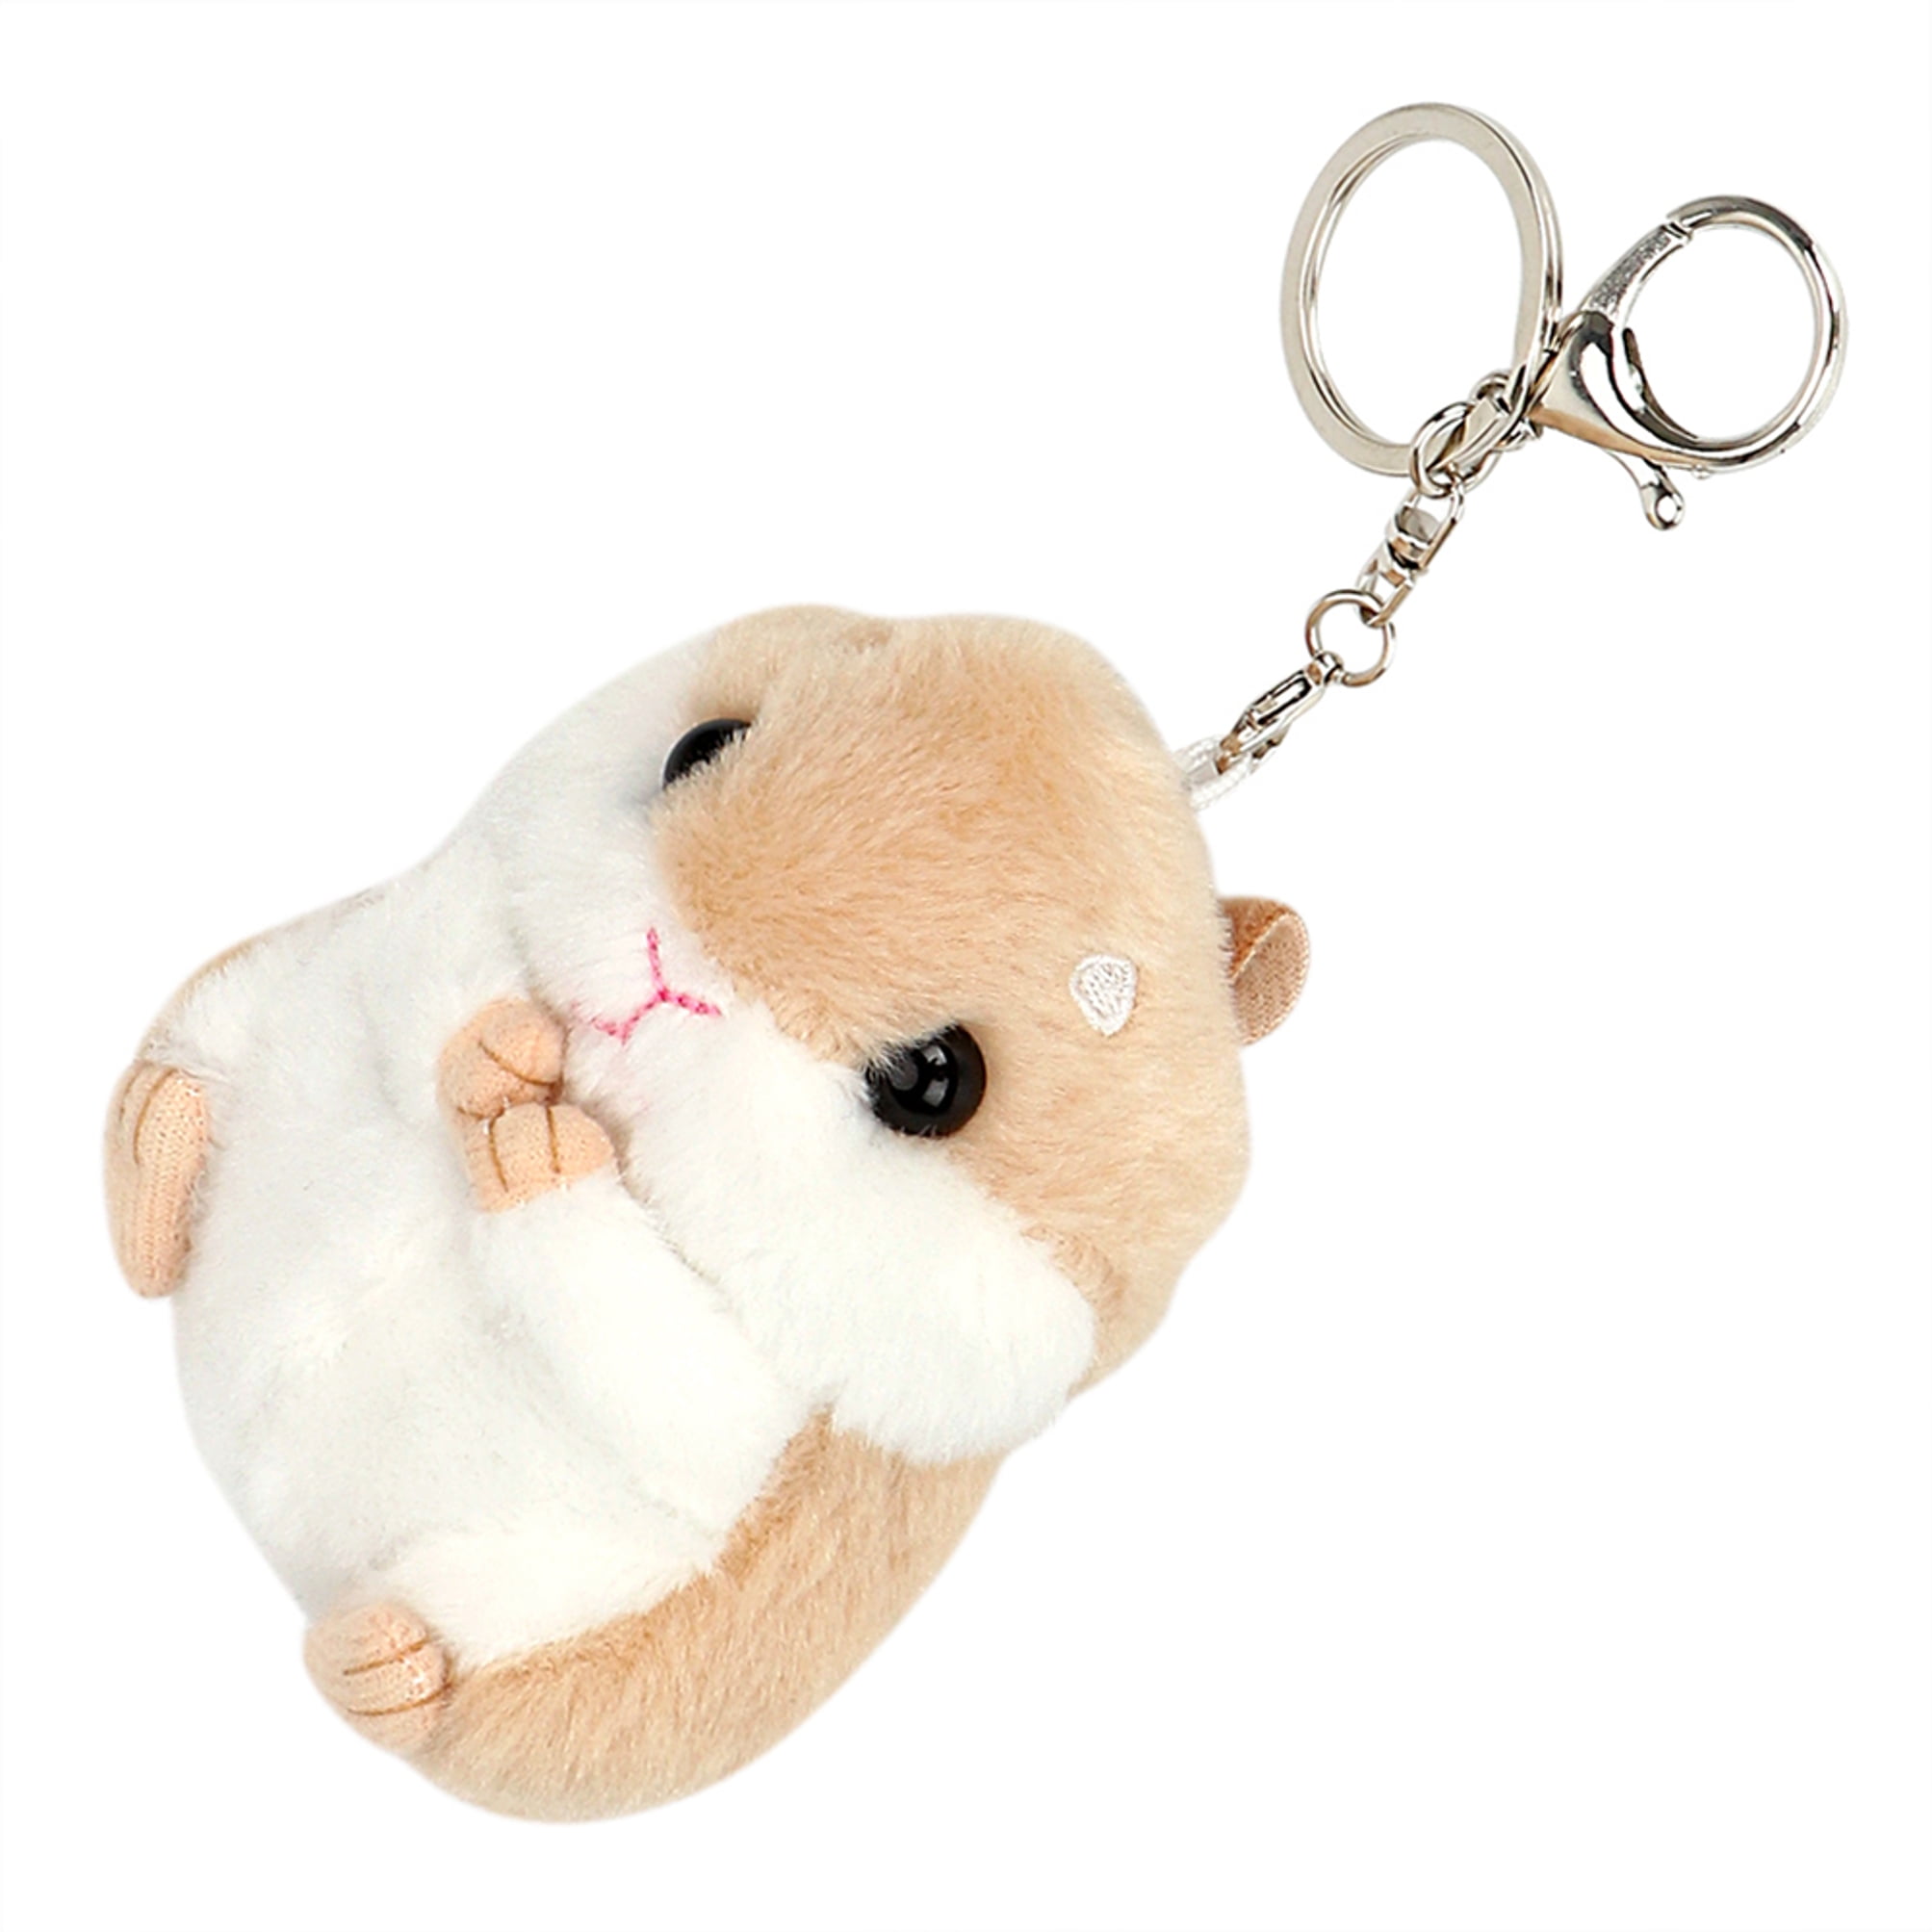 qazqa cute plush animal keychain kawaii fluffy stuffed animals